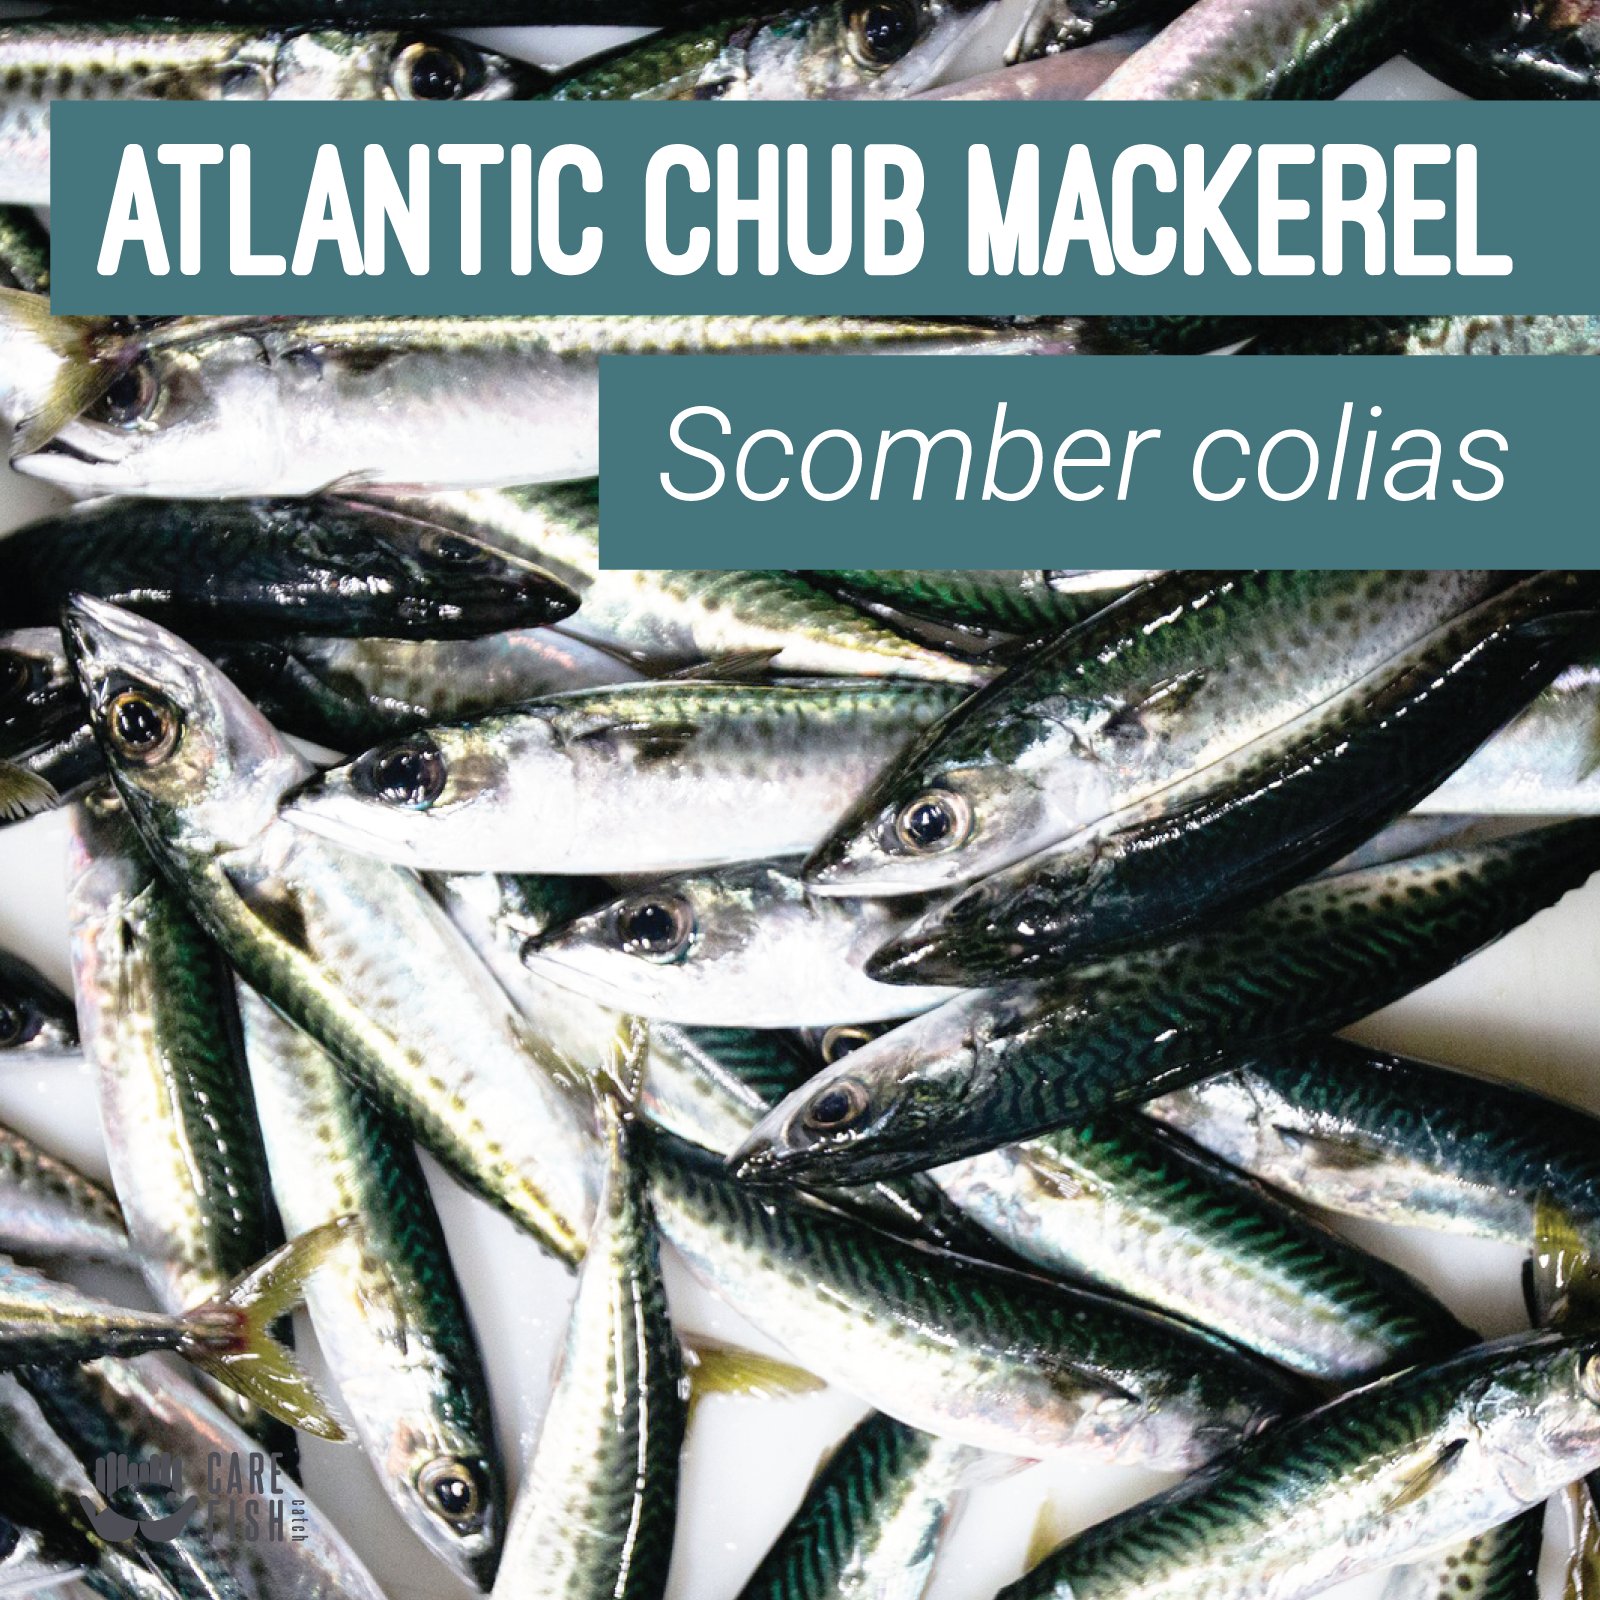 CAREFISH_Catch on X: 🐟Atlantic chub mackerel (Scomber colias) is